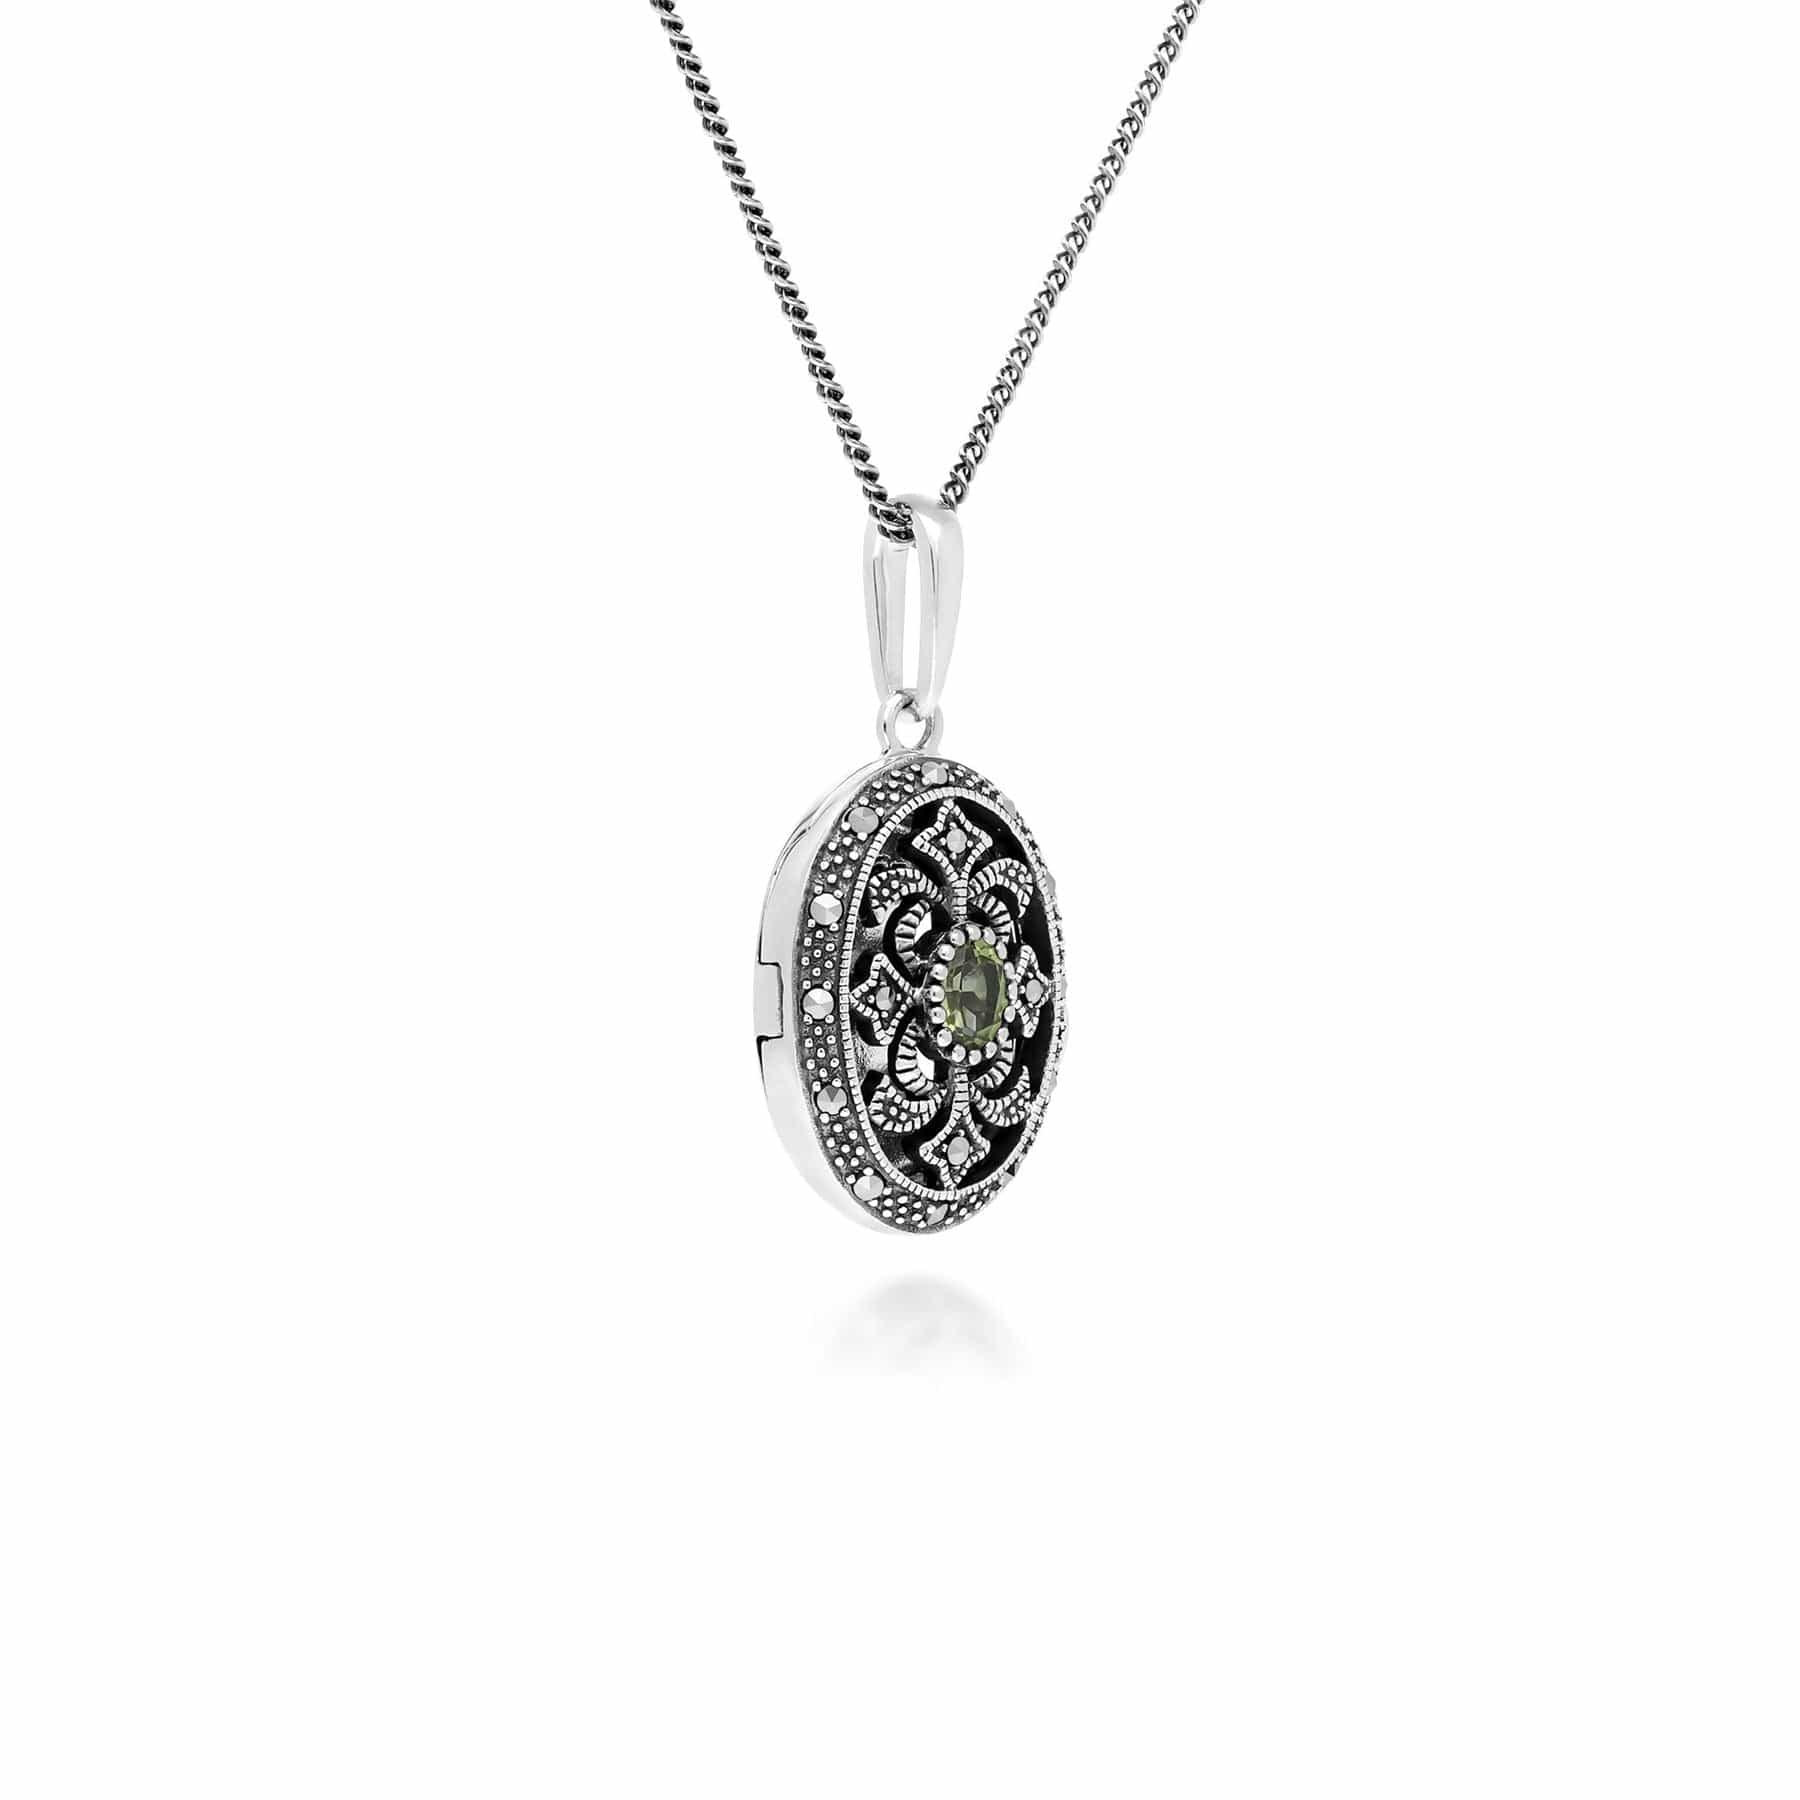 214N716207925 Art Nouveau Style Oval Peridot & Marcasite Locket Necklace in 925 Sterling Silver 2